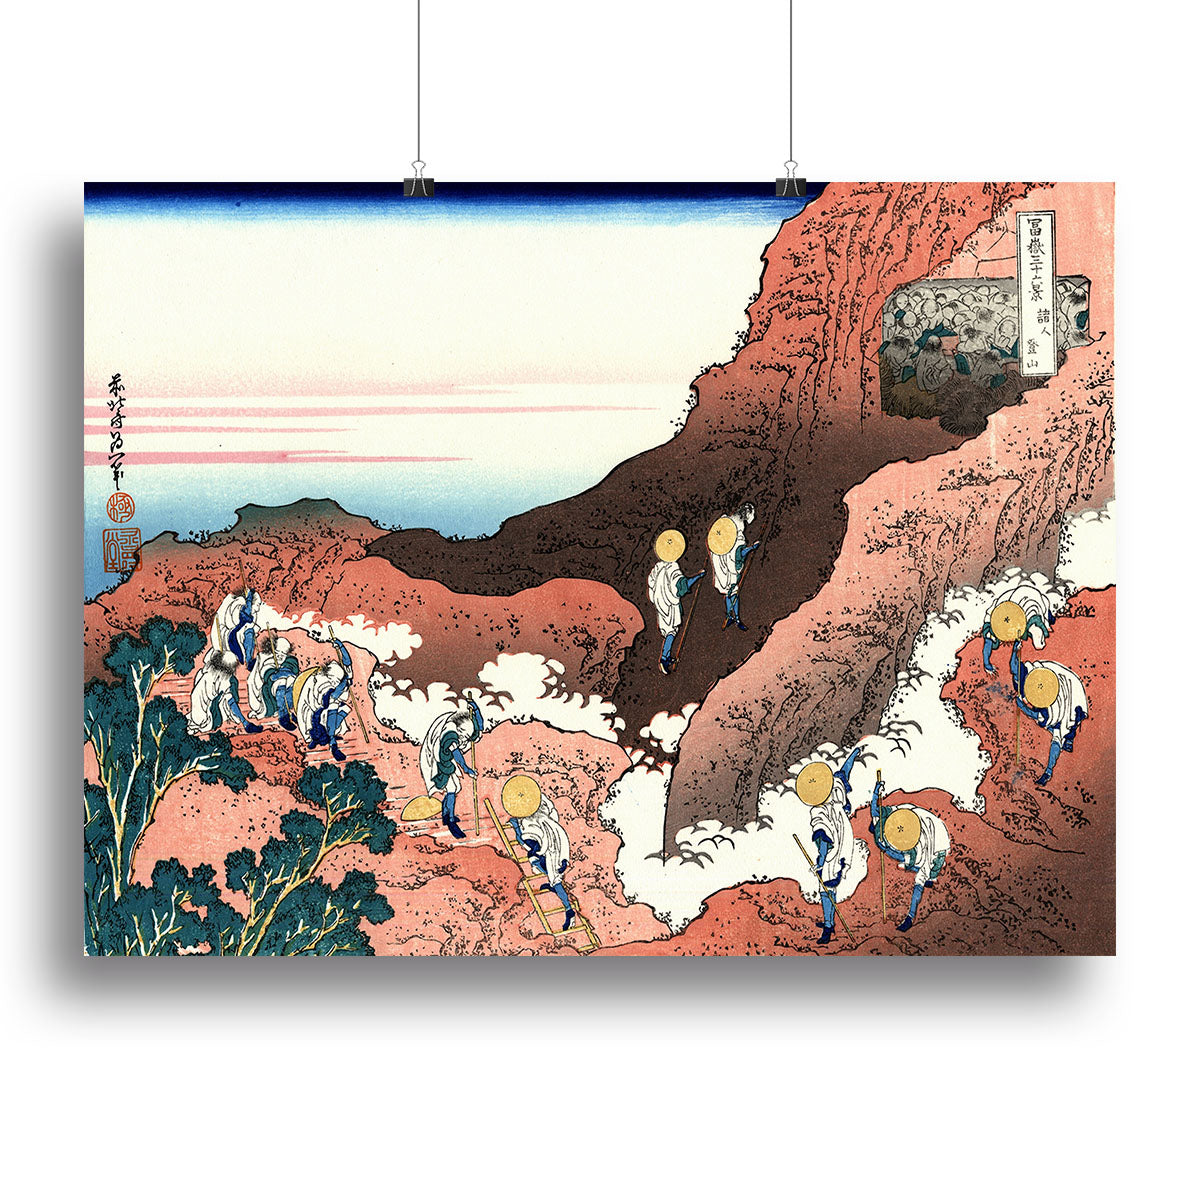 Climbing on Mt. Fuji by Hokusai Canvas Print or Poster - Canvas Art Rocks - 2